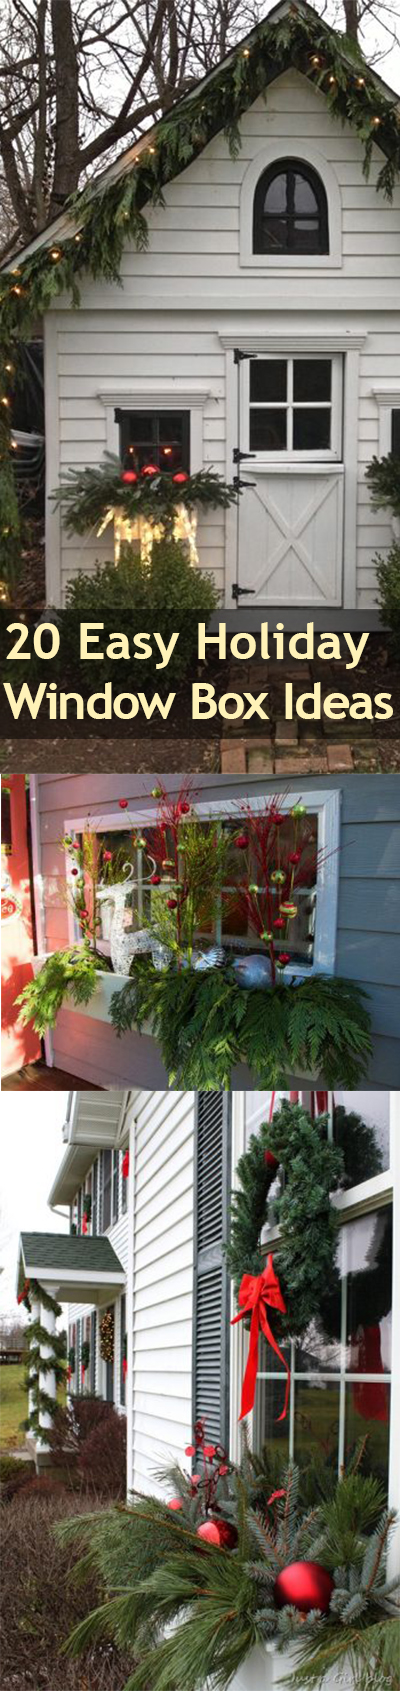 Holiday Window Boxes, Window Box Ideas, Window Box Inspiration, Holiday Window Decor, Popular Pin, Christmas Decor Ideas, Christmas Decor, Outdoor Holiday Decor, Easy Outdoor Decor Ideas